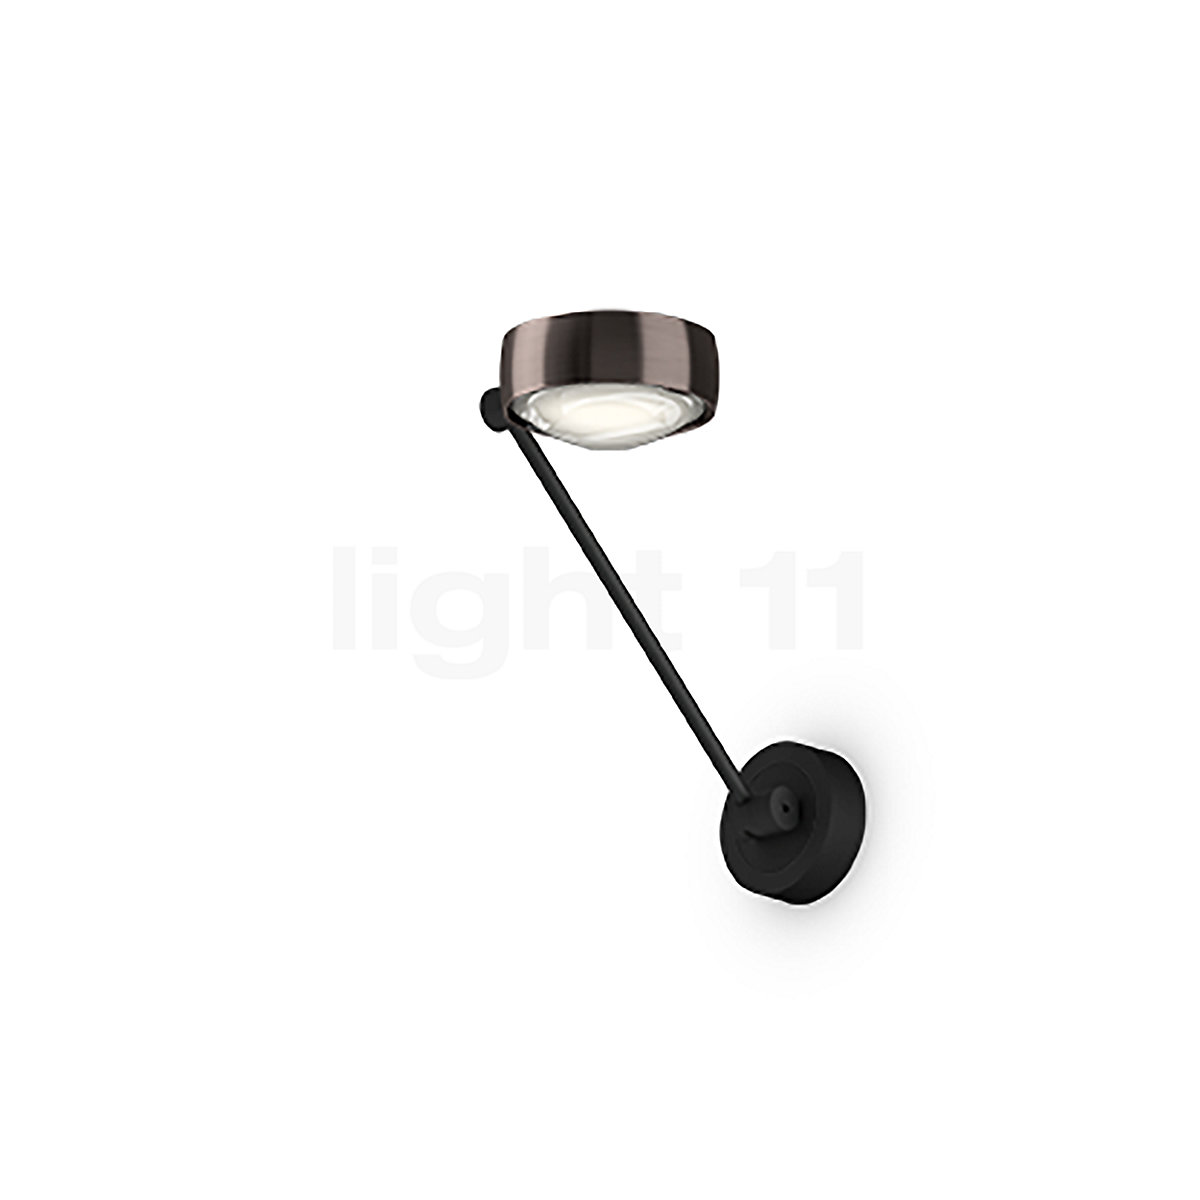 Buy Occhio Sento Parete Singolo 30 Up E Wall Light LED at